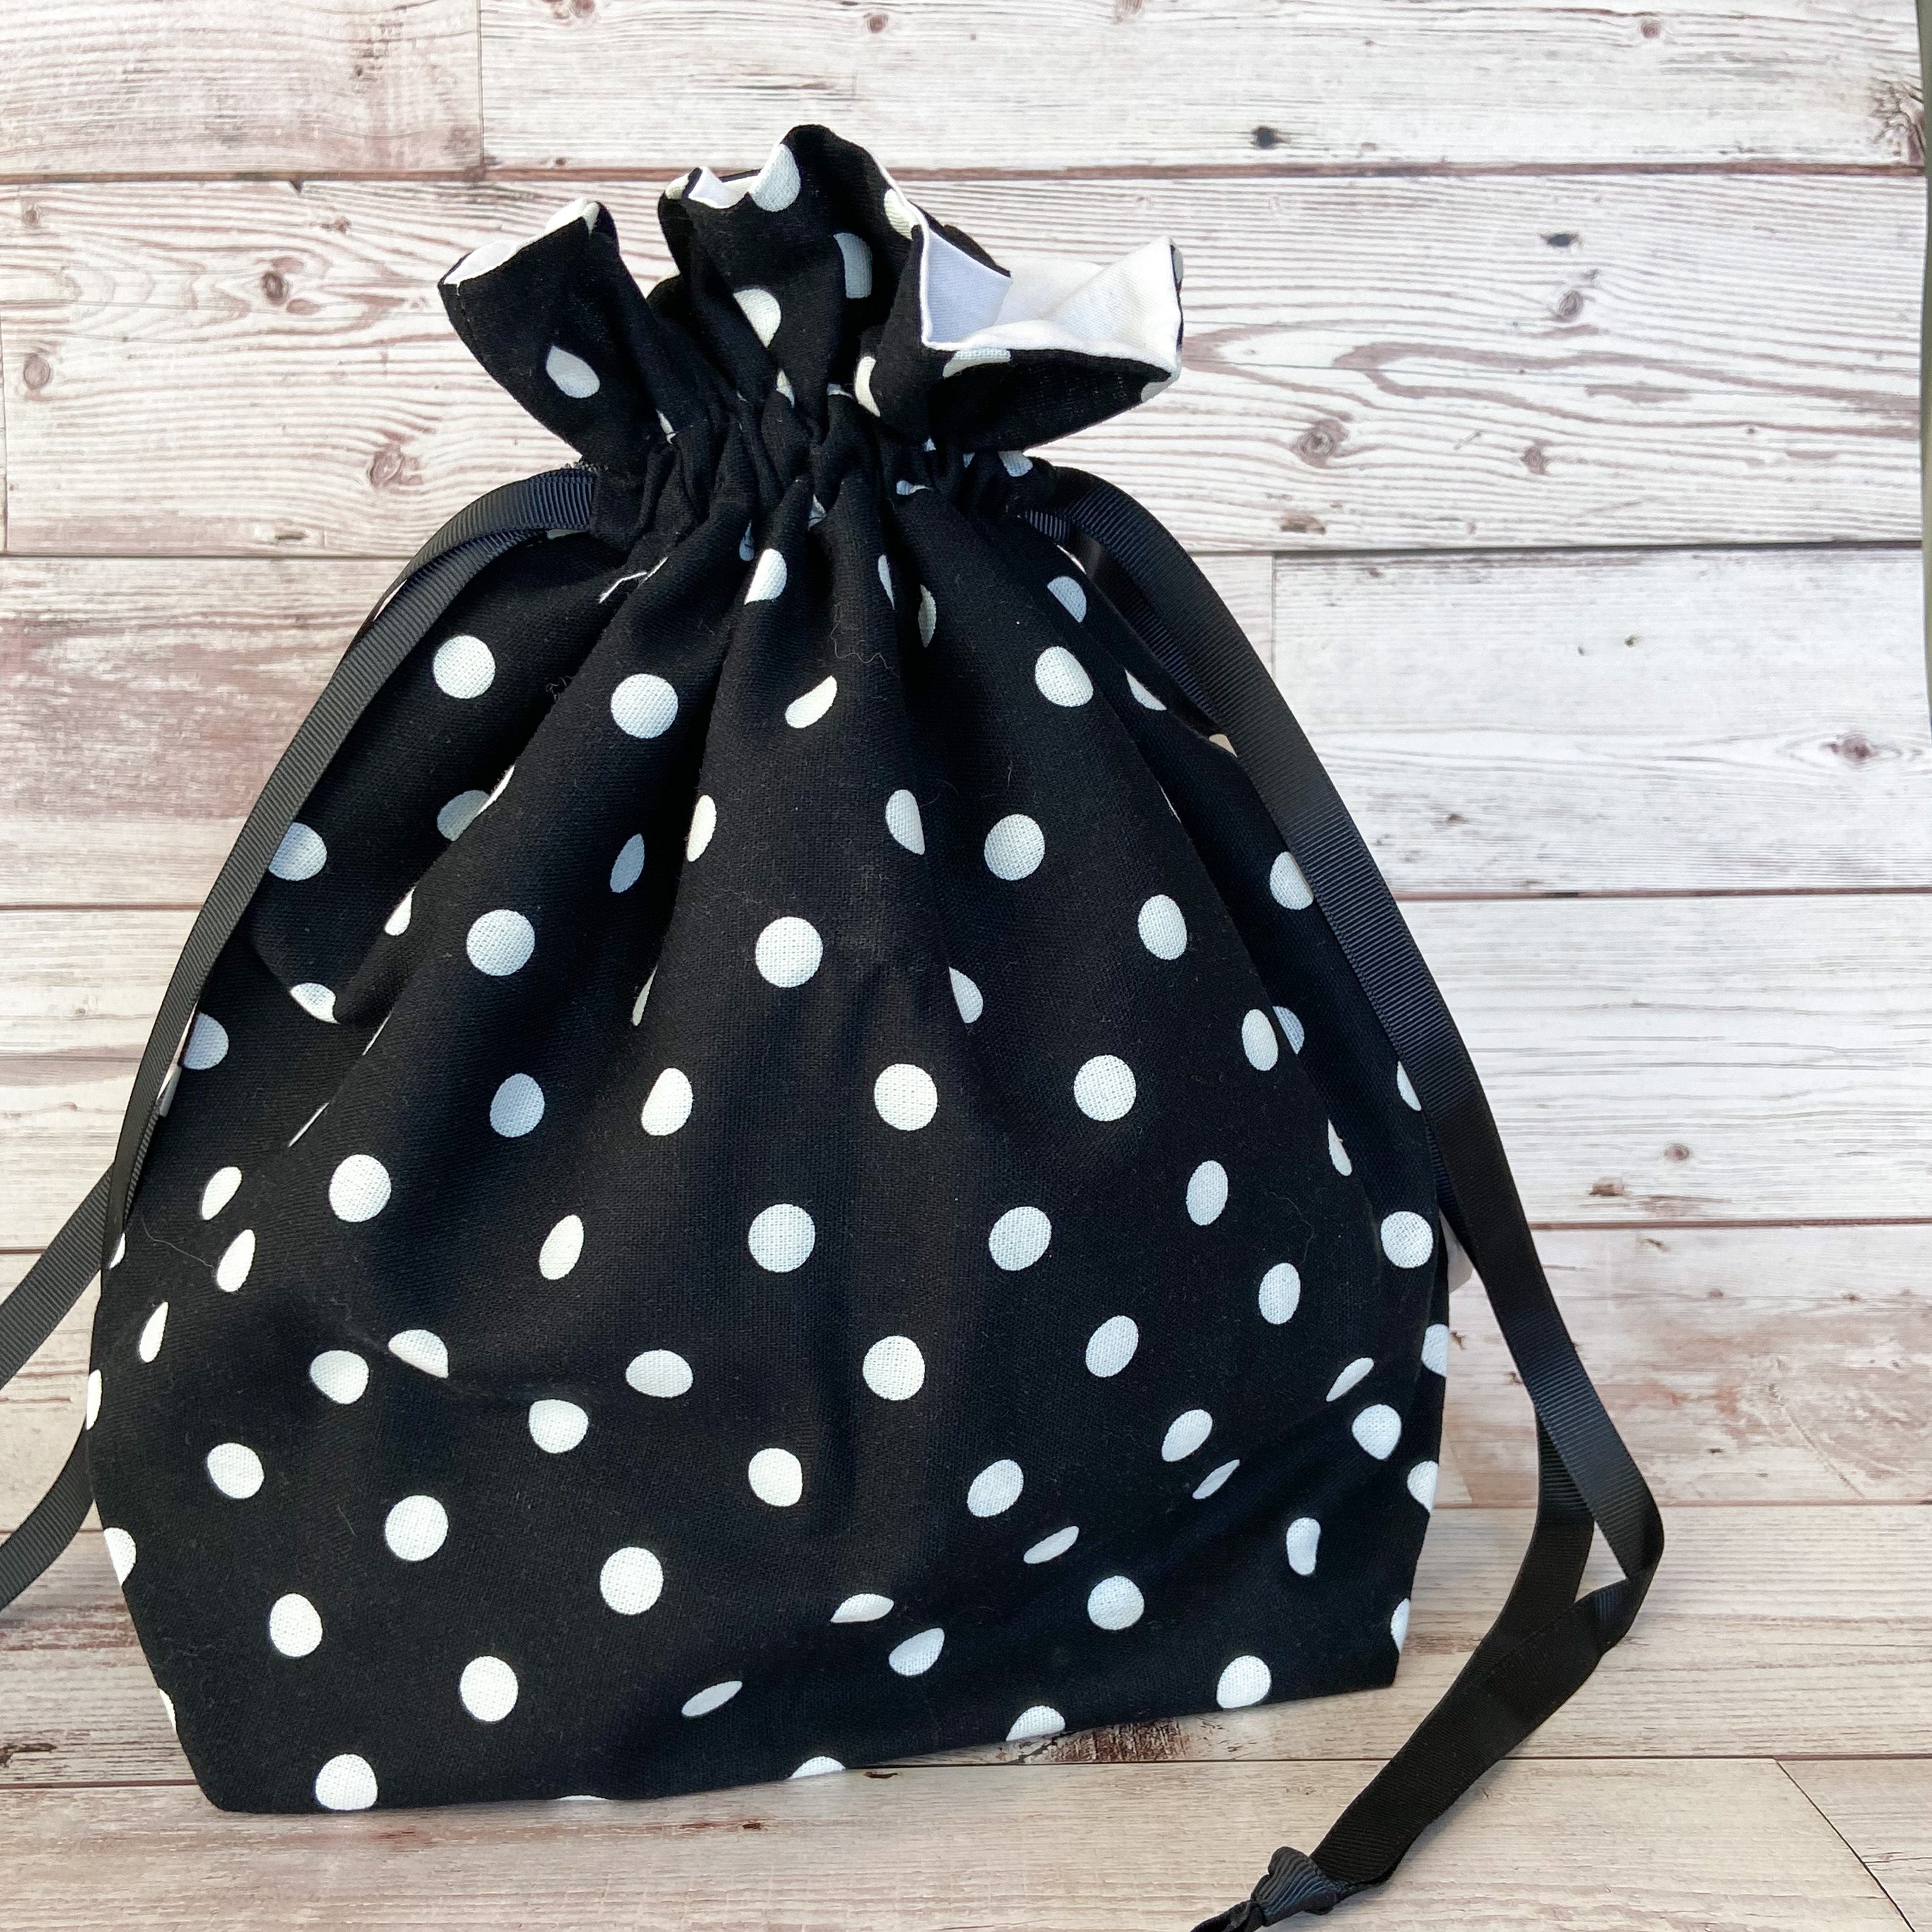 Large Drawstring Bag - Black with White Polka Dots